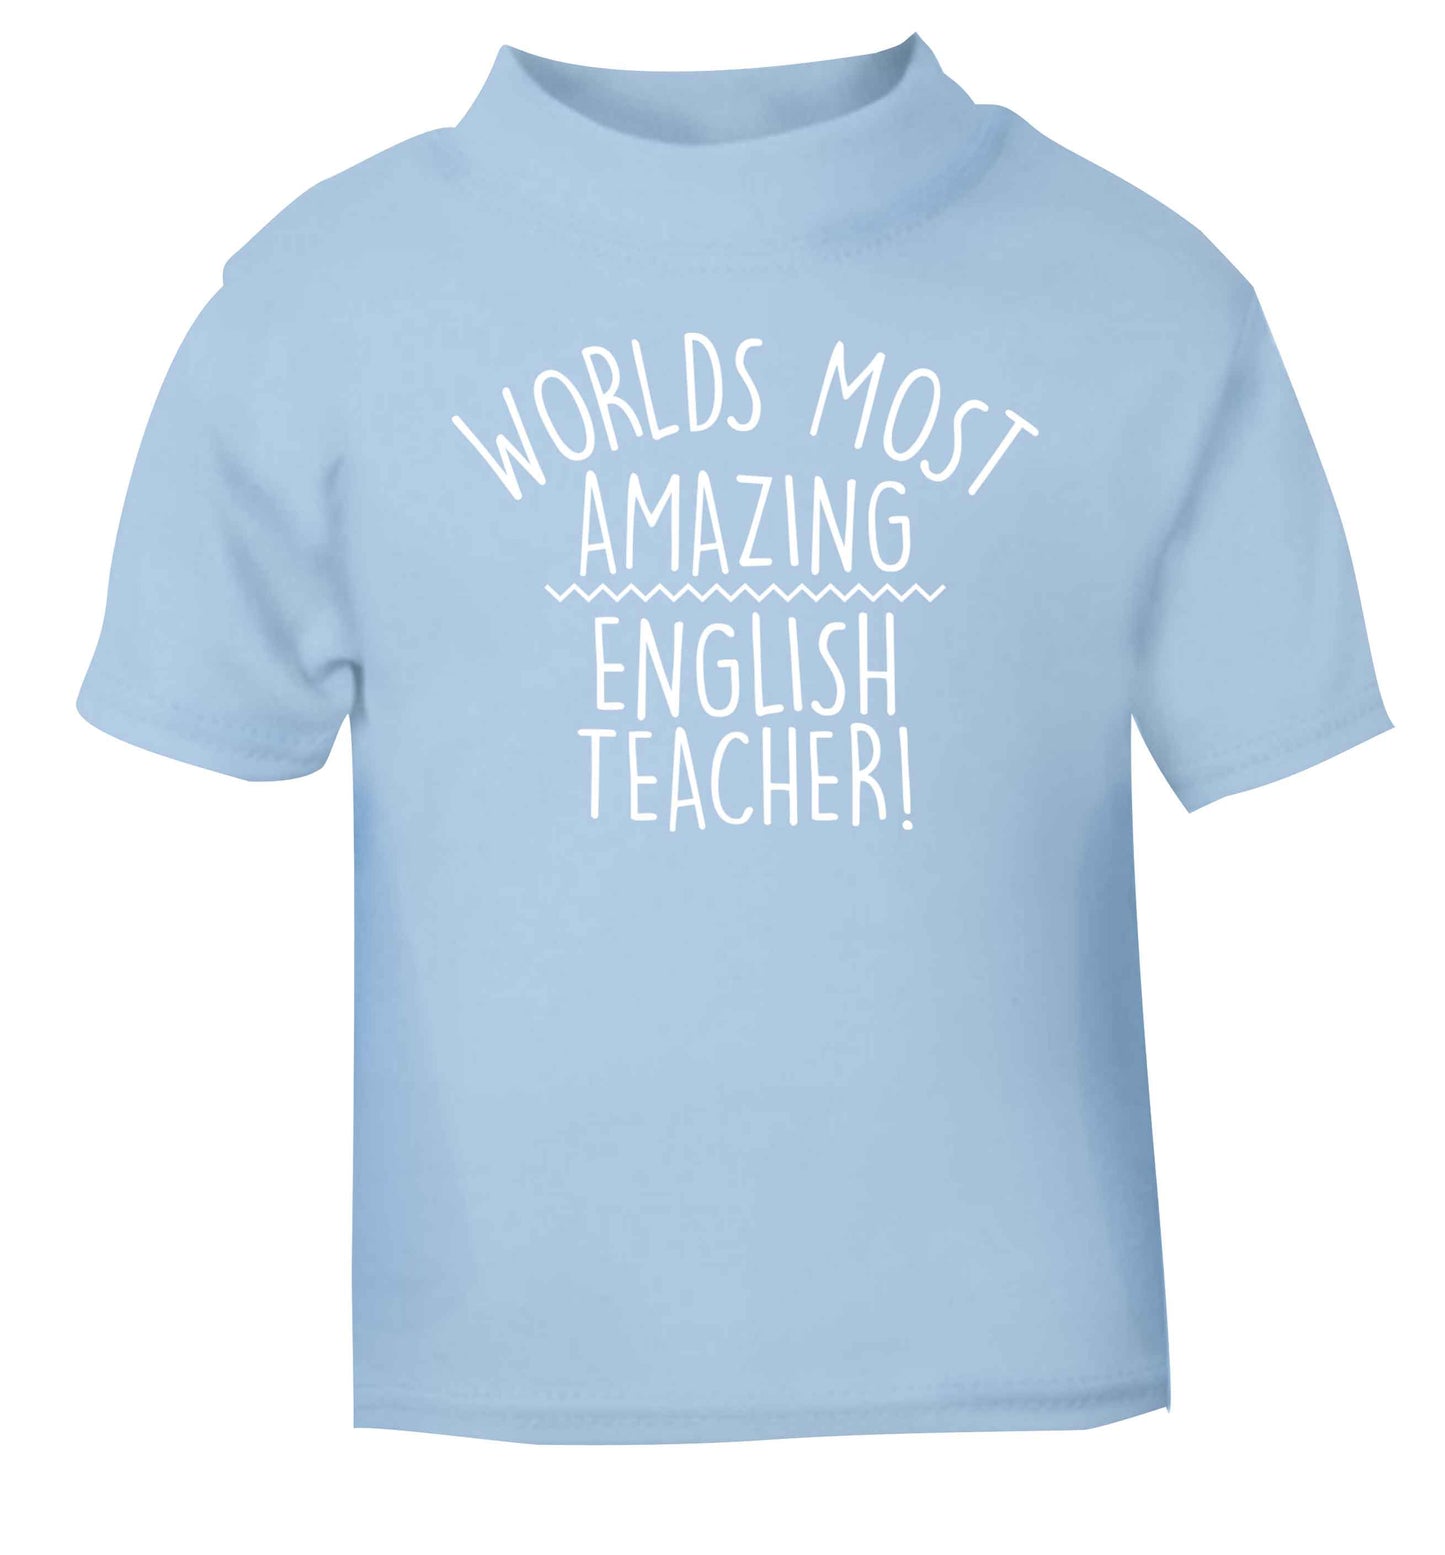 Worlds most amazing English teacher light blue baby toddler Tshirt 2 Years